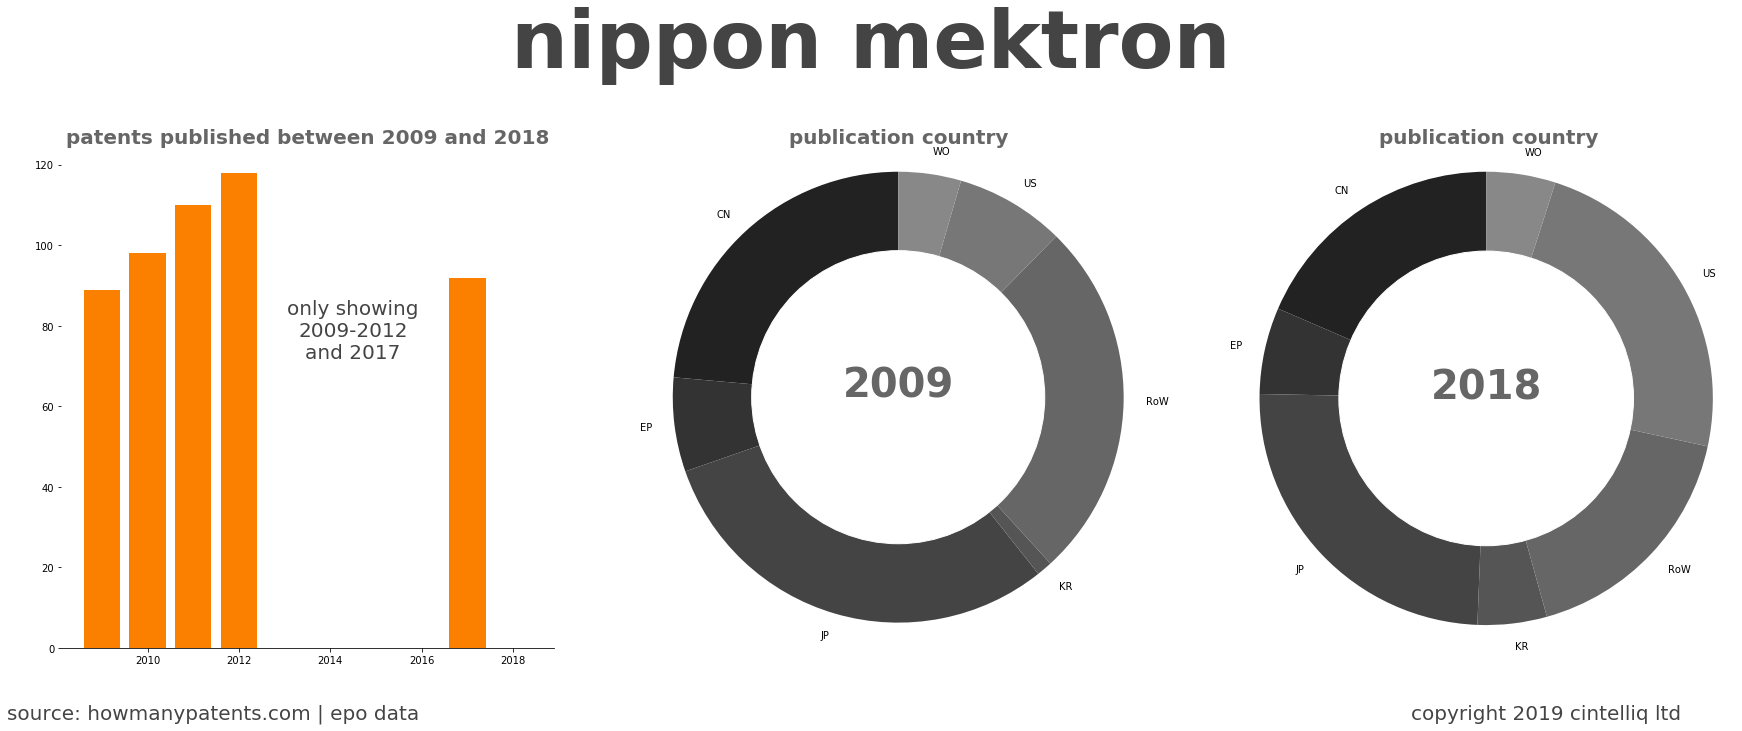 summary of patents for Nippon Mektron